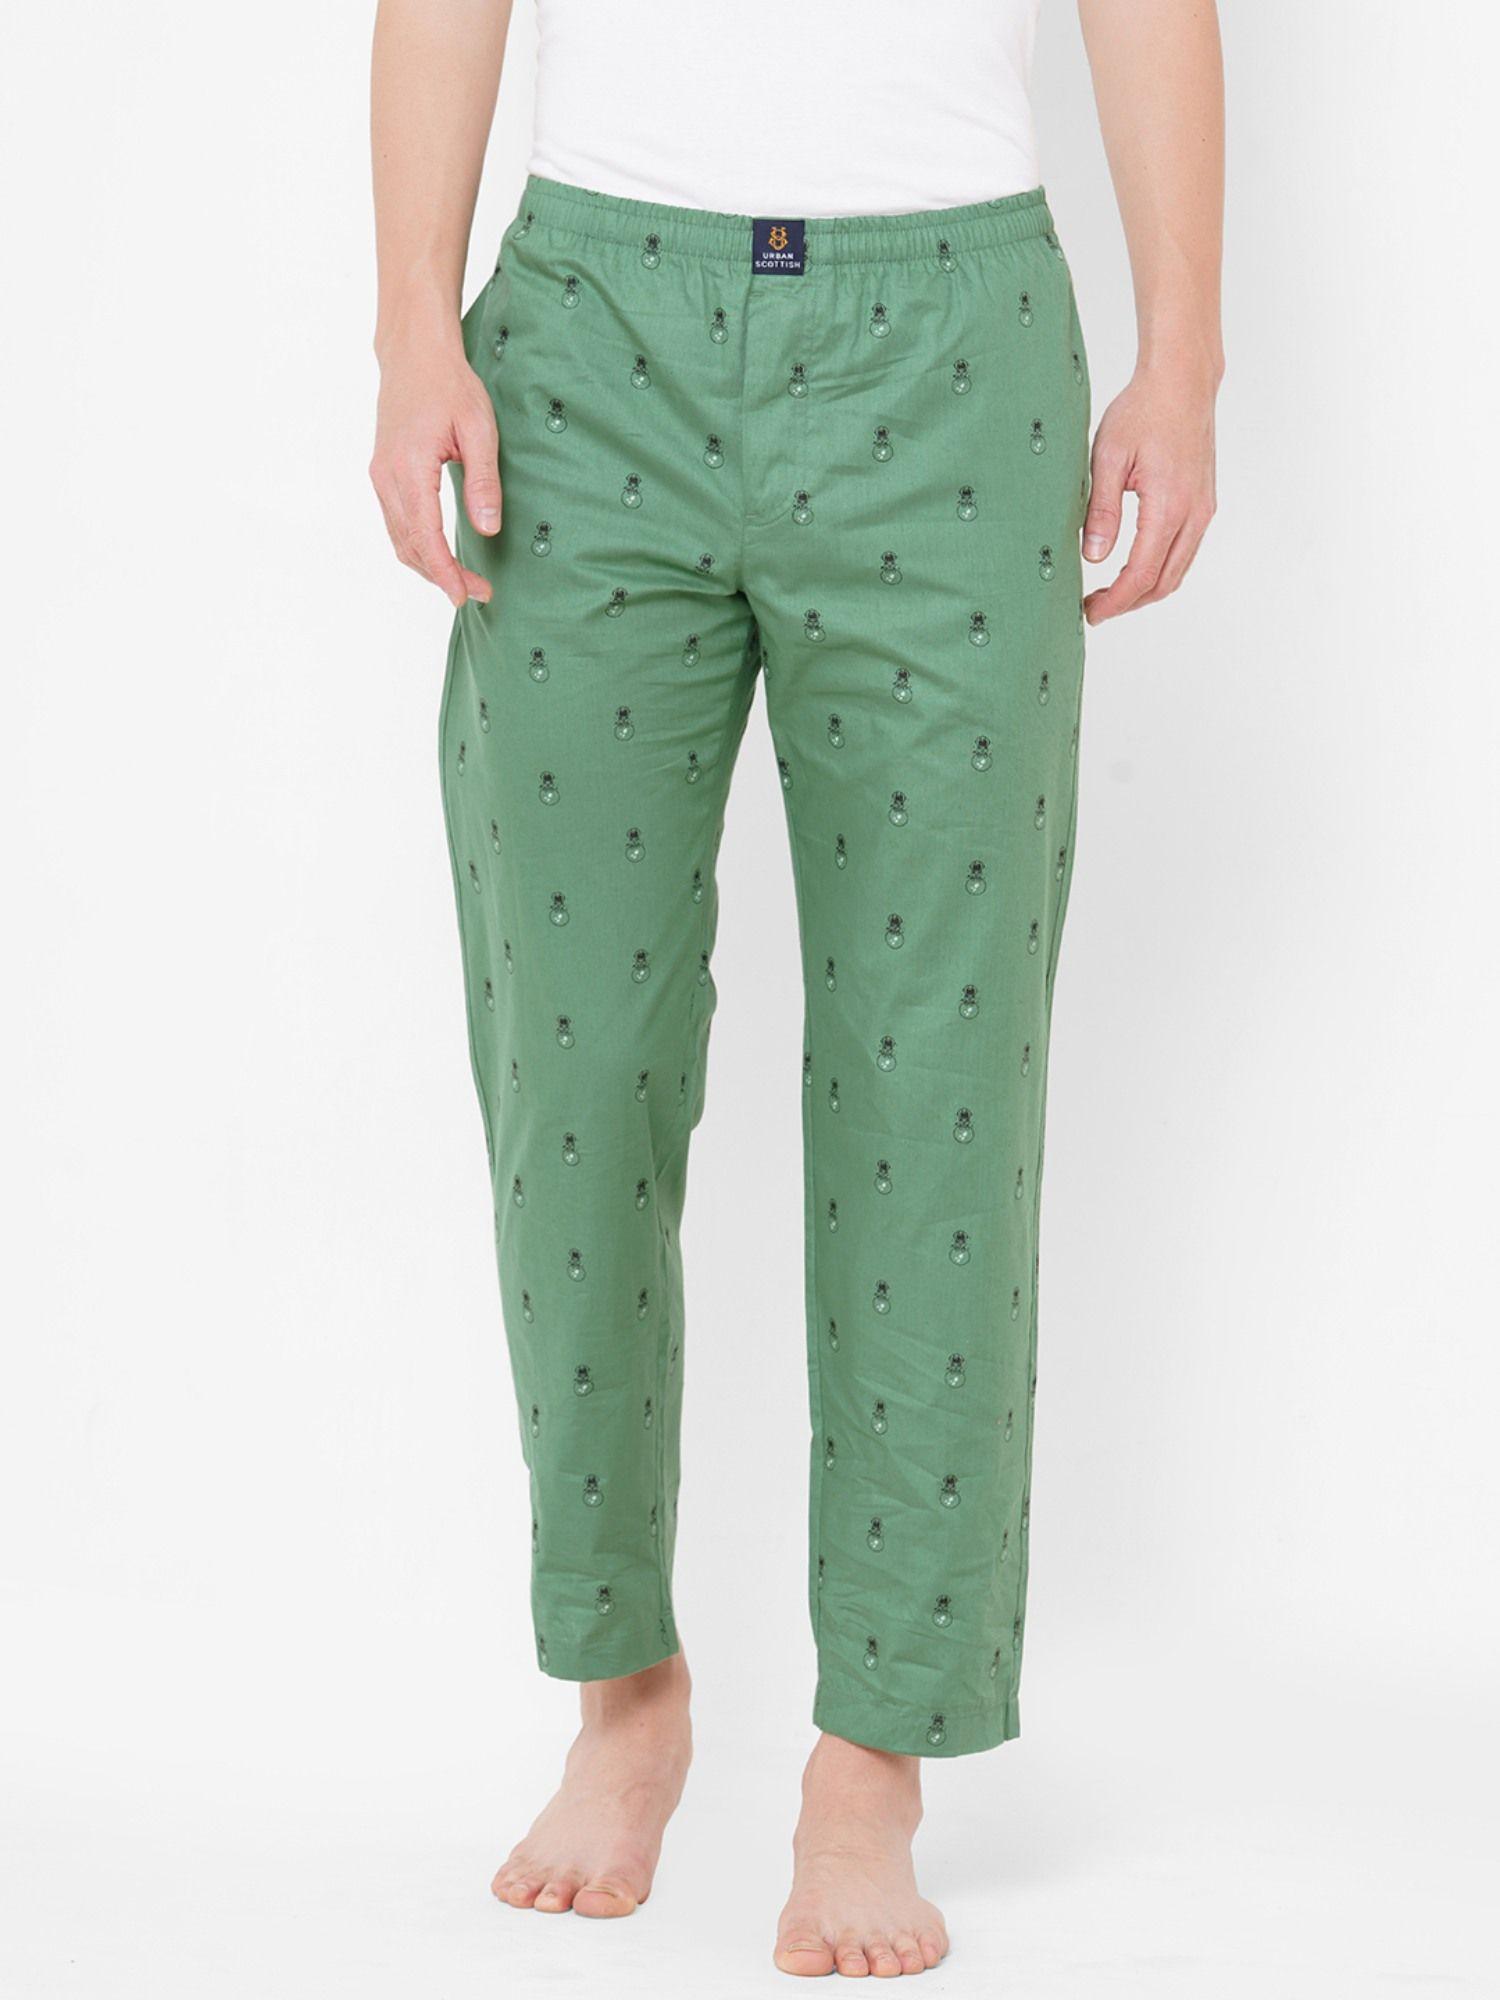 mens mint green cotton lounge pants